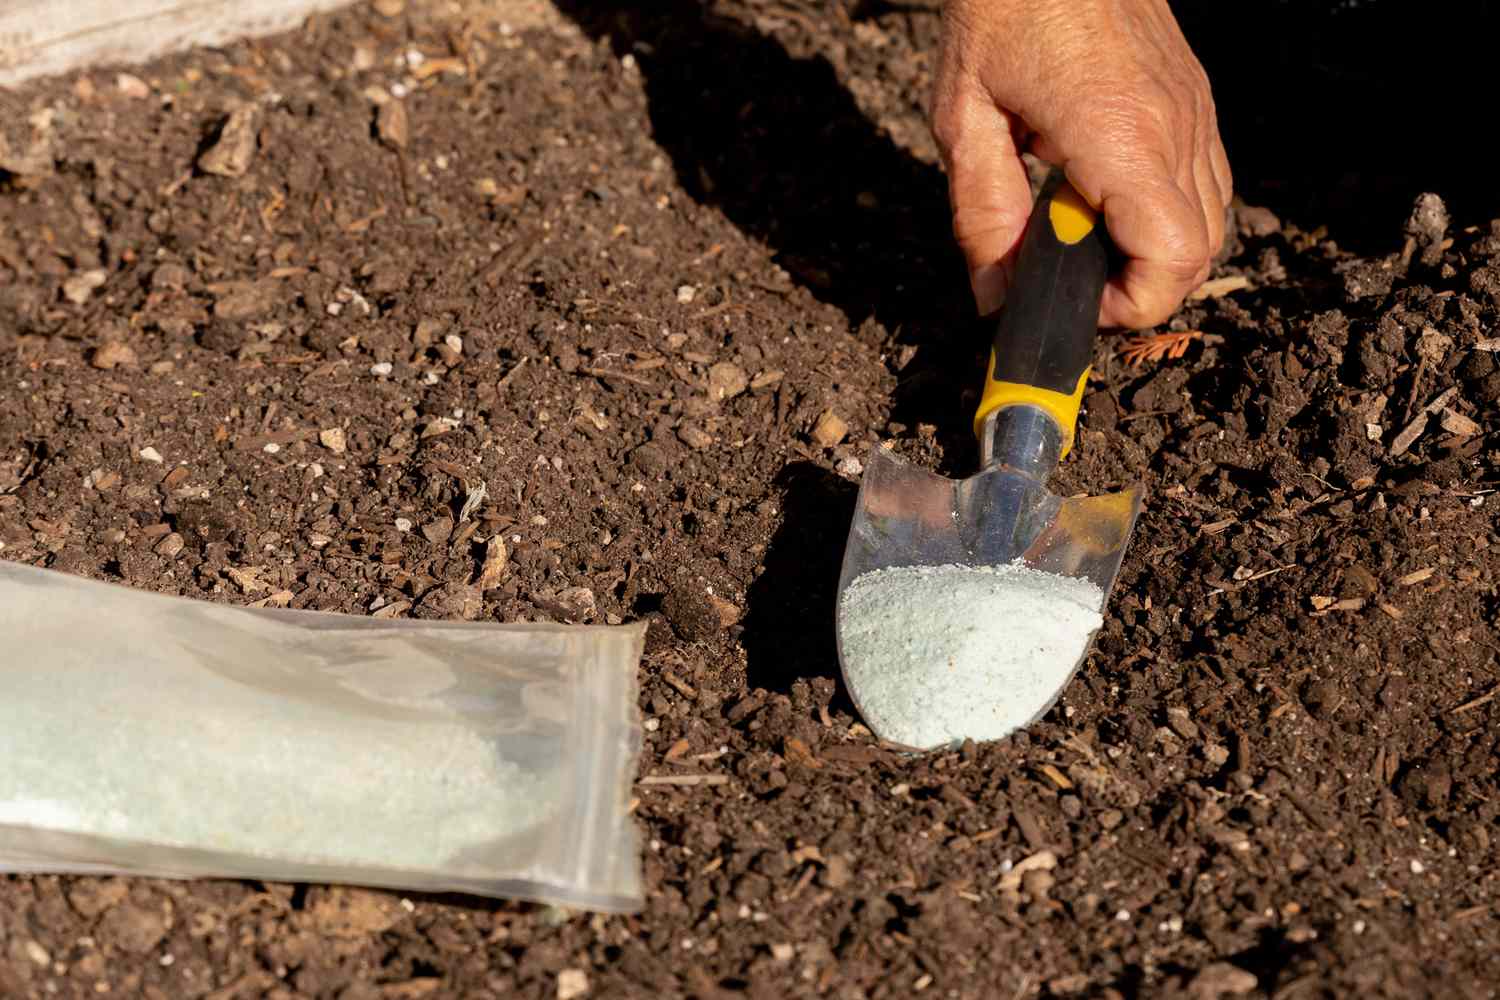 Sulfur on hand-held shovel added to soil for more acidity